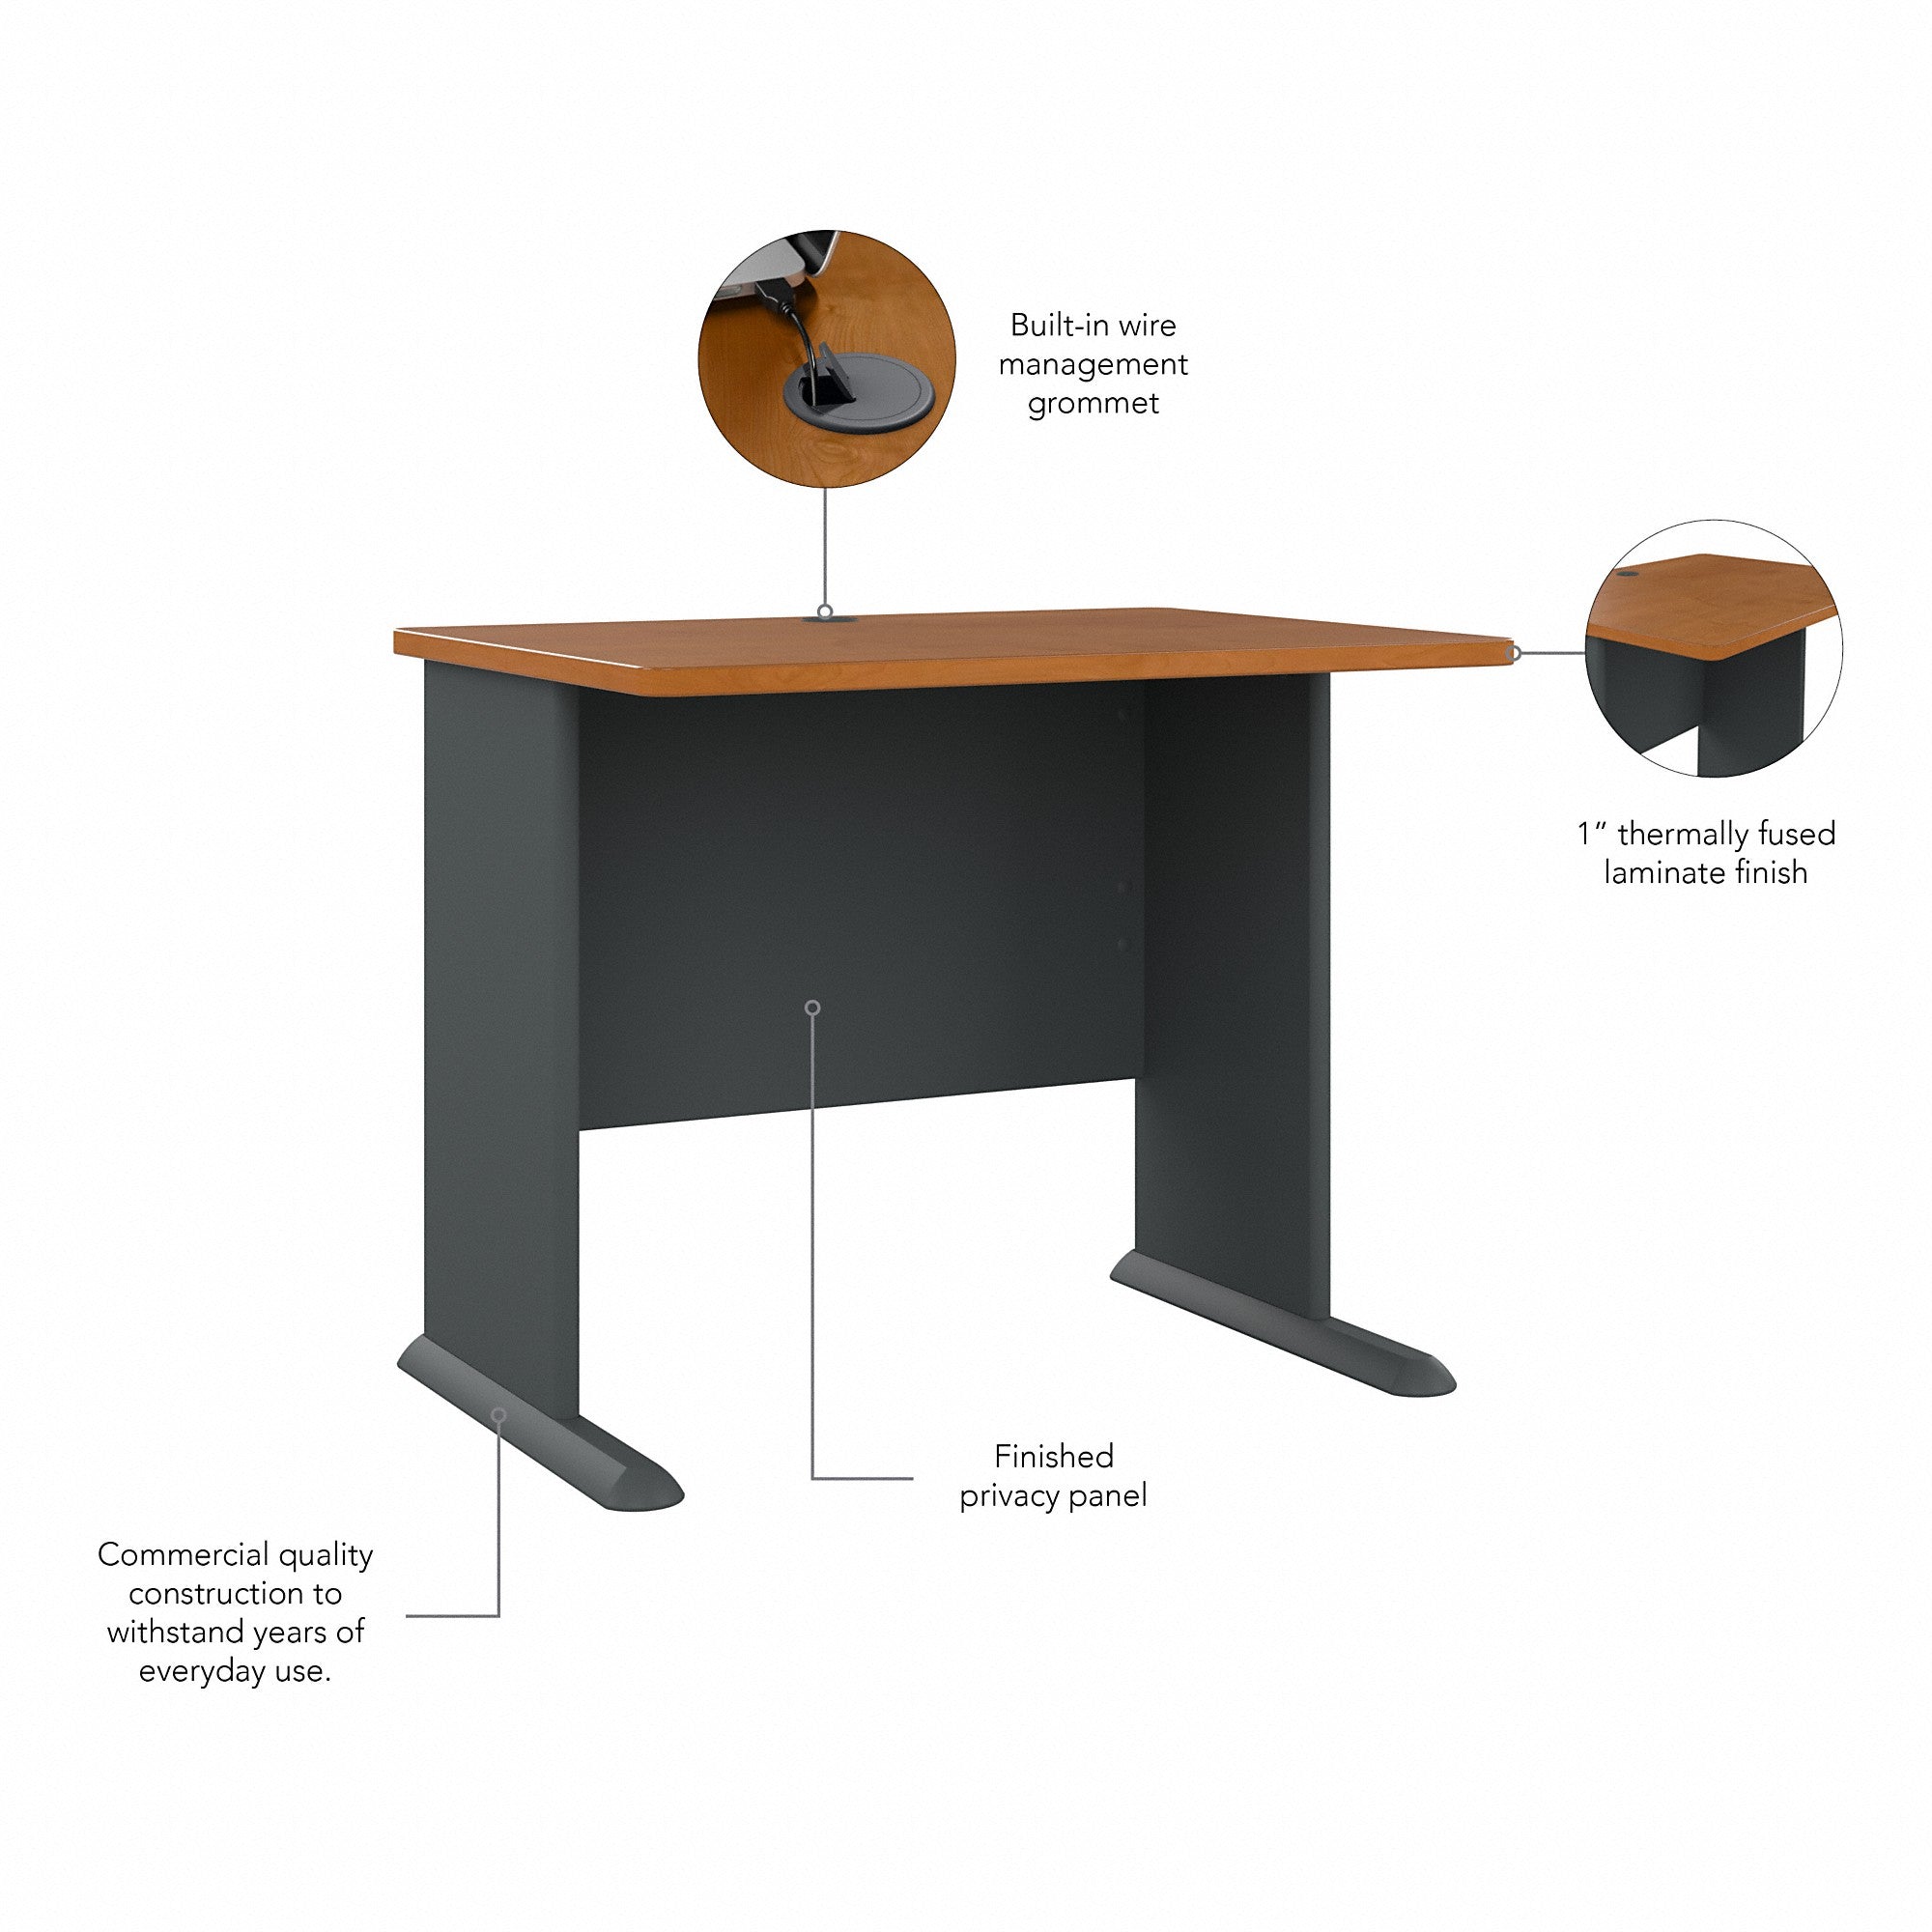 Bush Business Furniture Series A 36W Desk